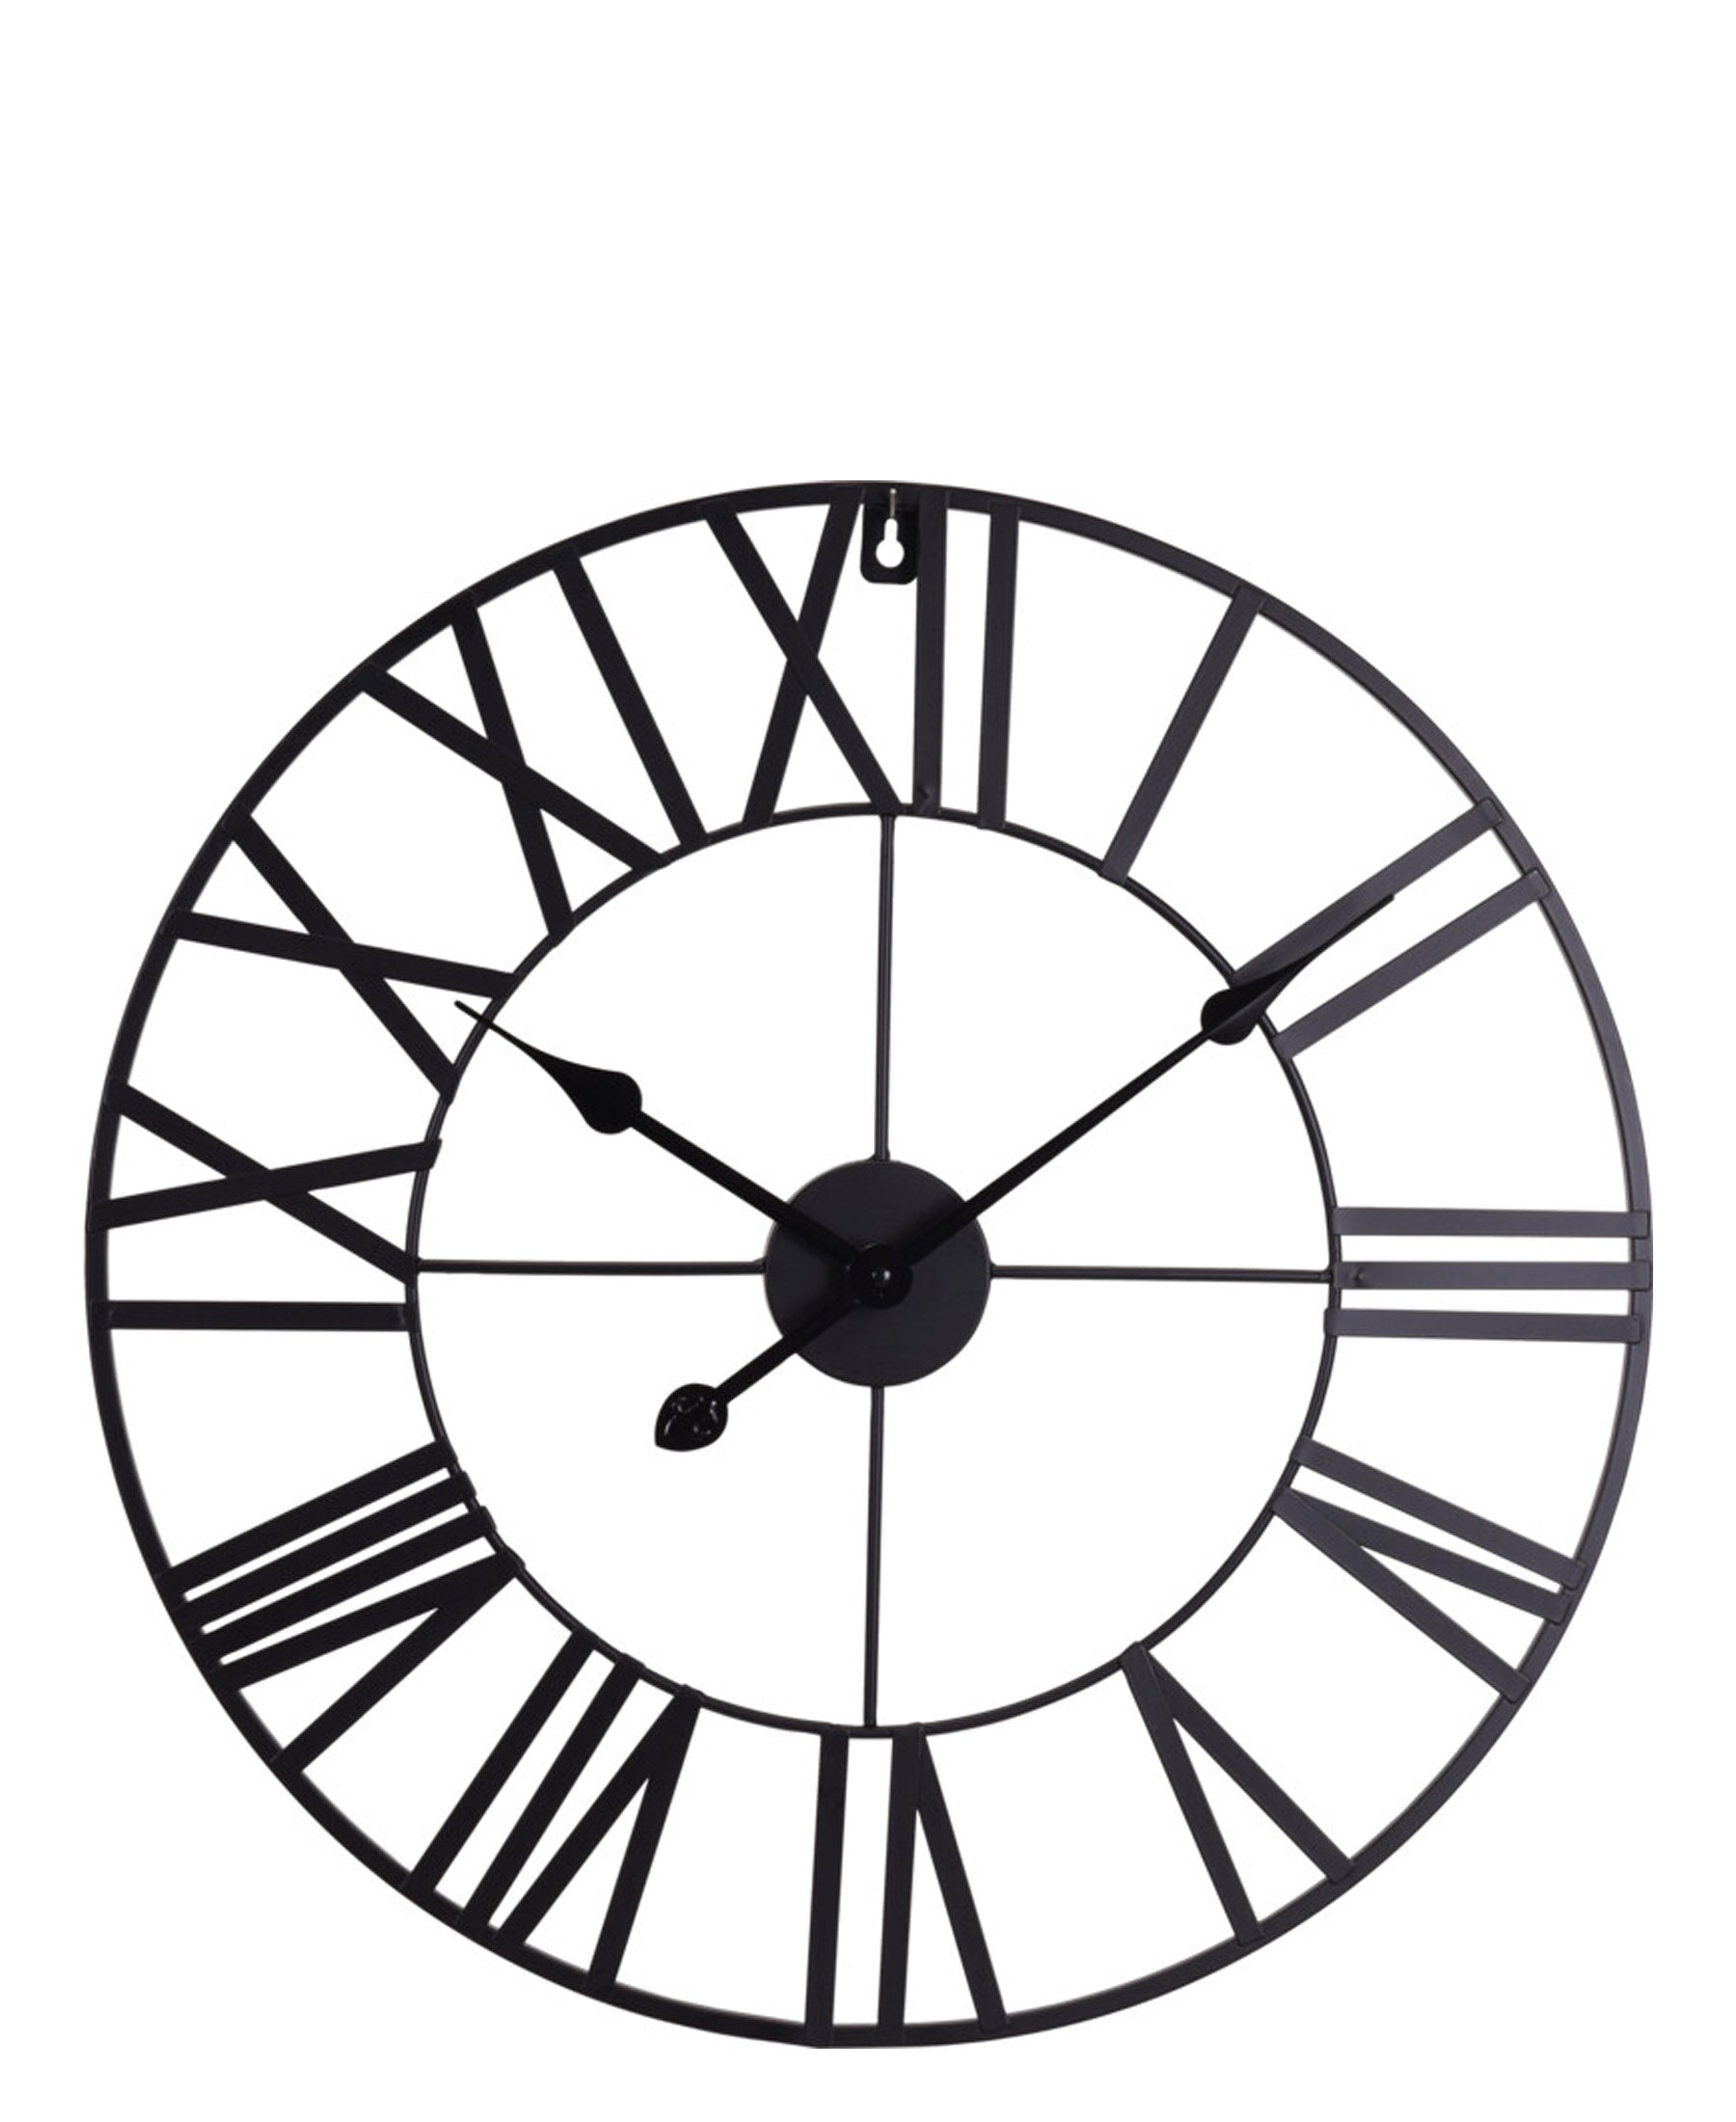 Urban Decor 57cm Metal Wall Clock - Black